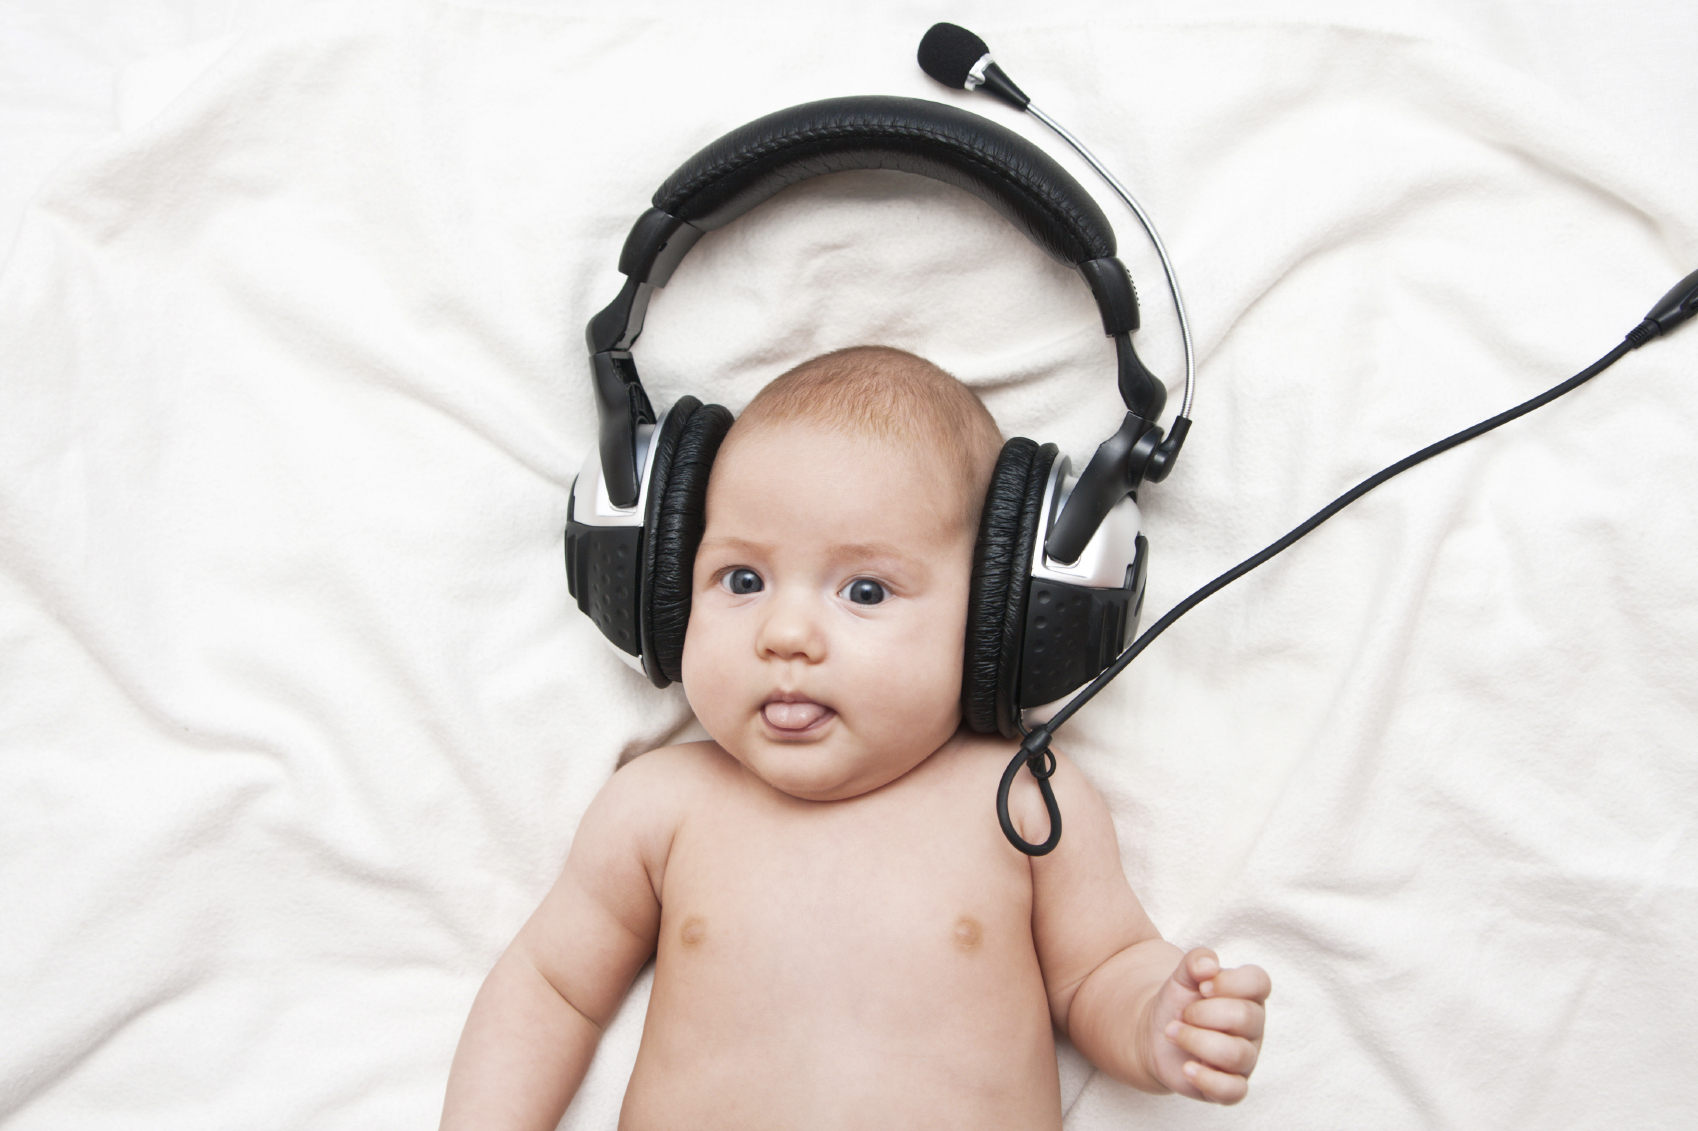 Listening Room Acoustics: 7 Common Myths